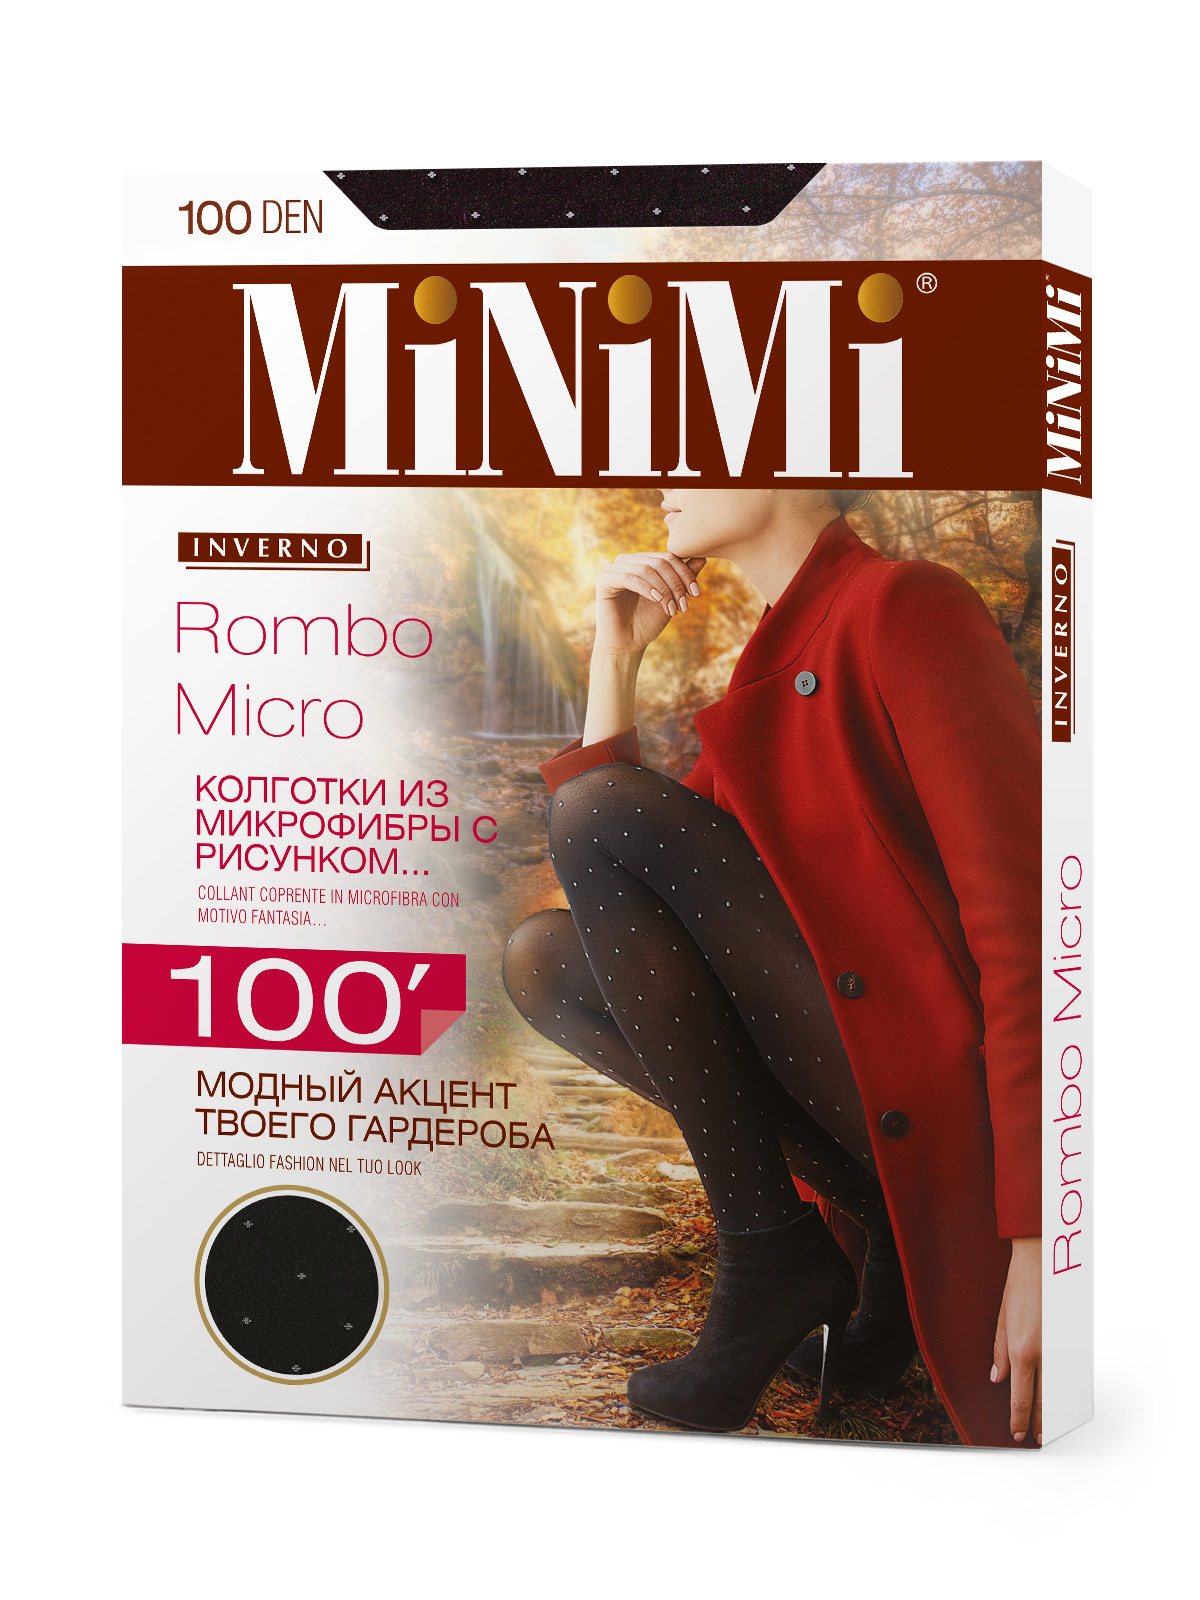 Minimi Rombo micro